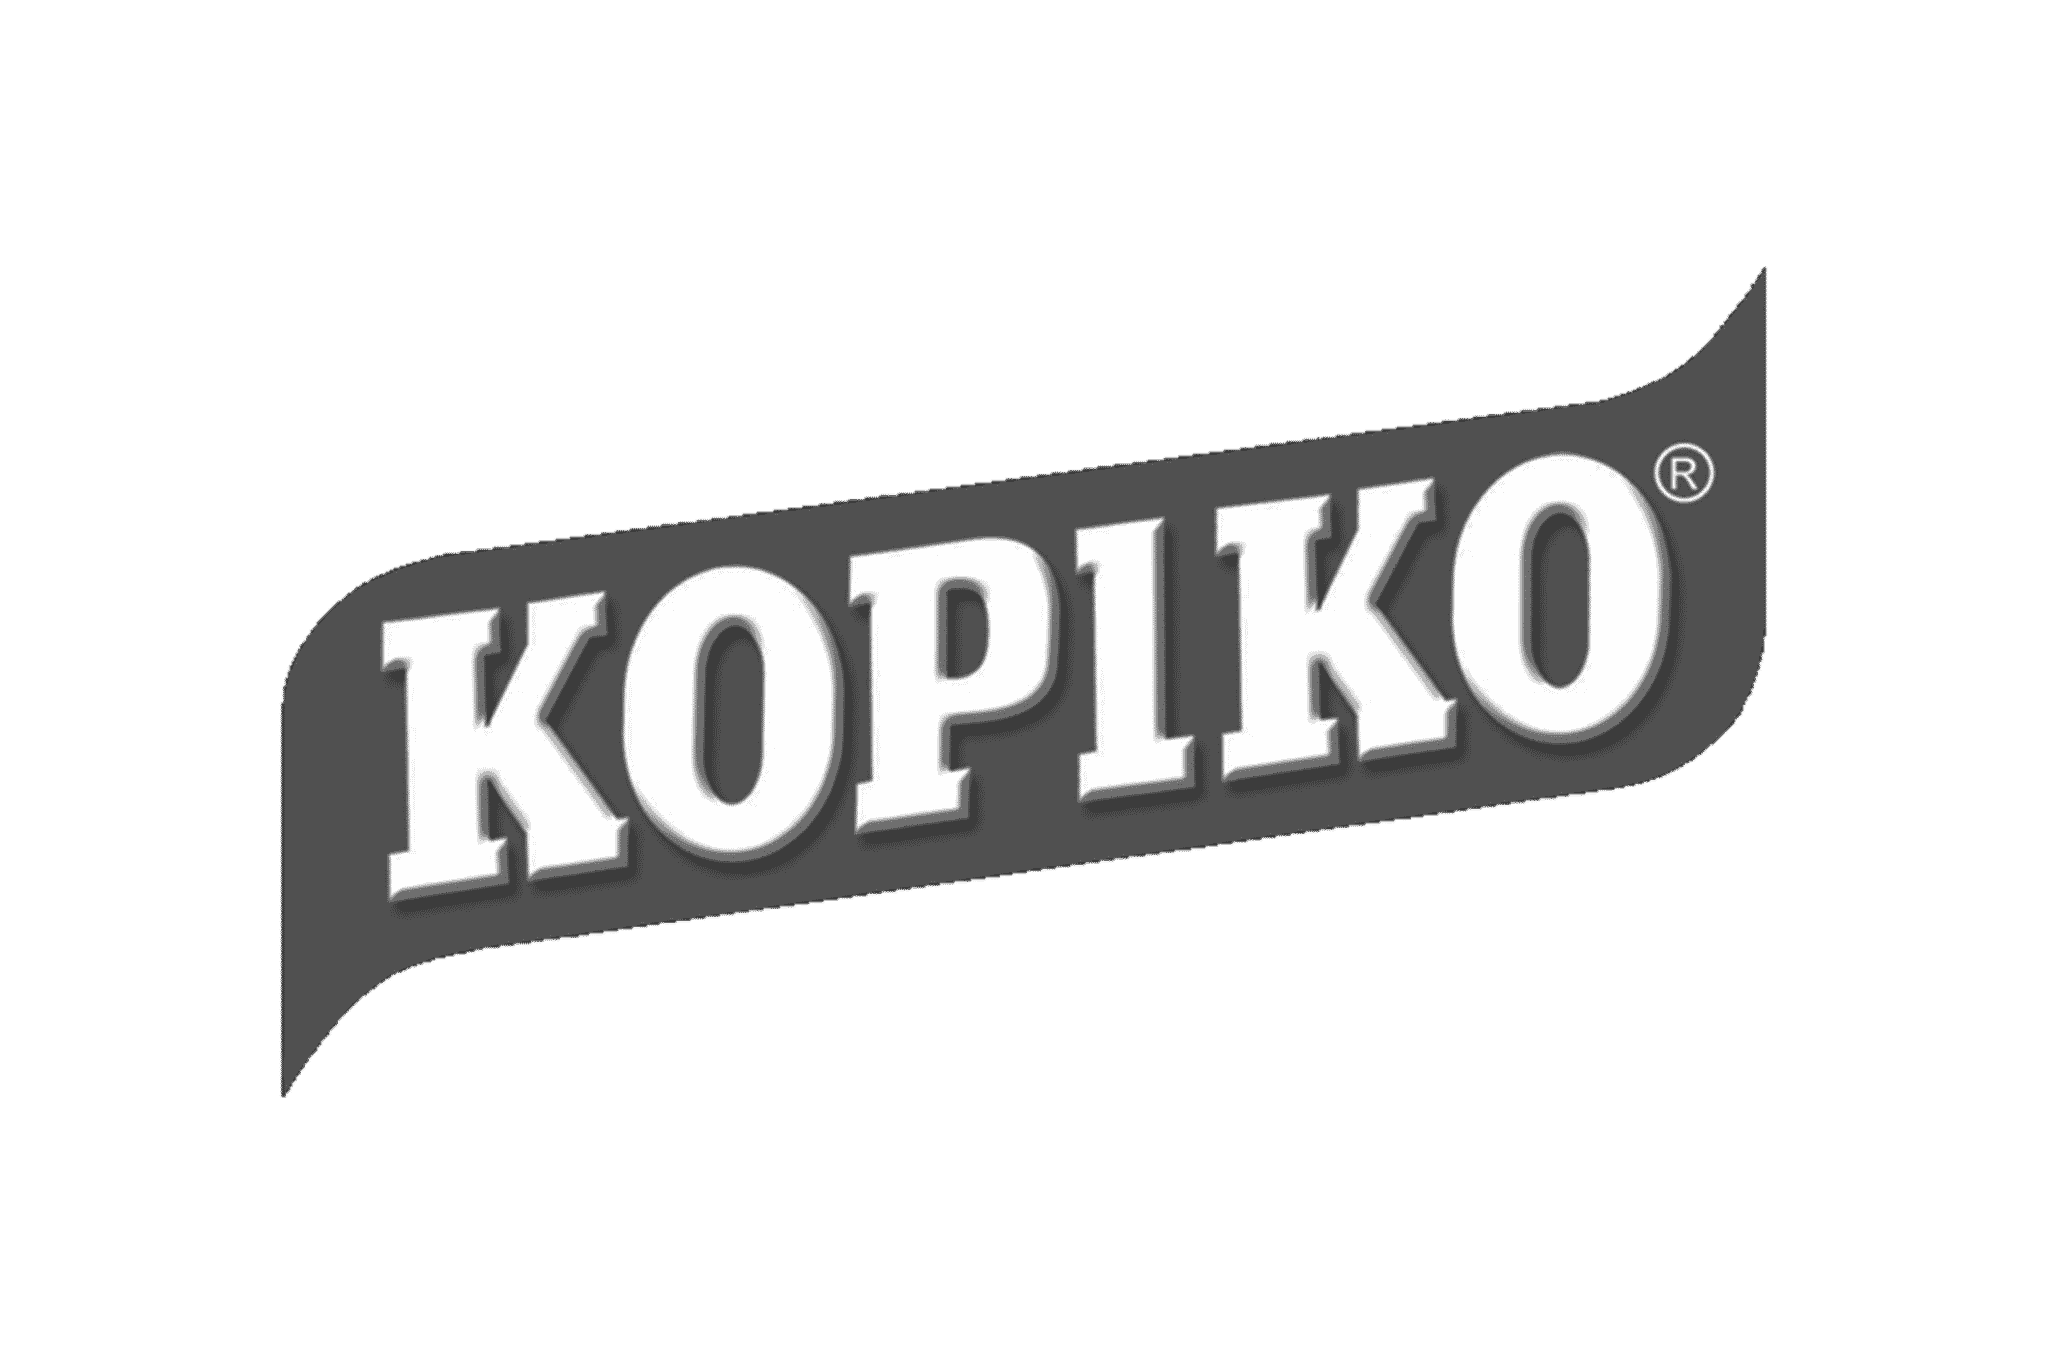 Logo Kopiko